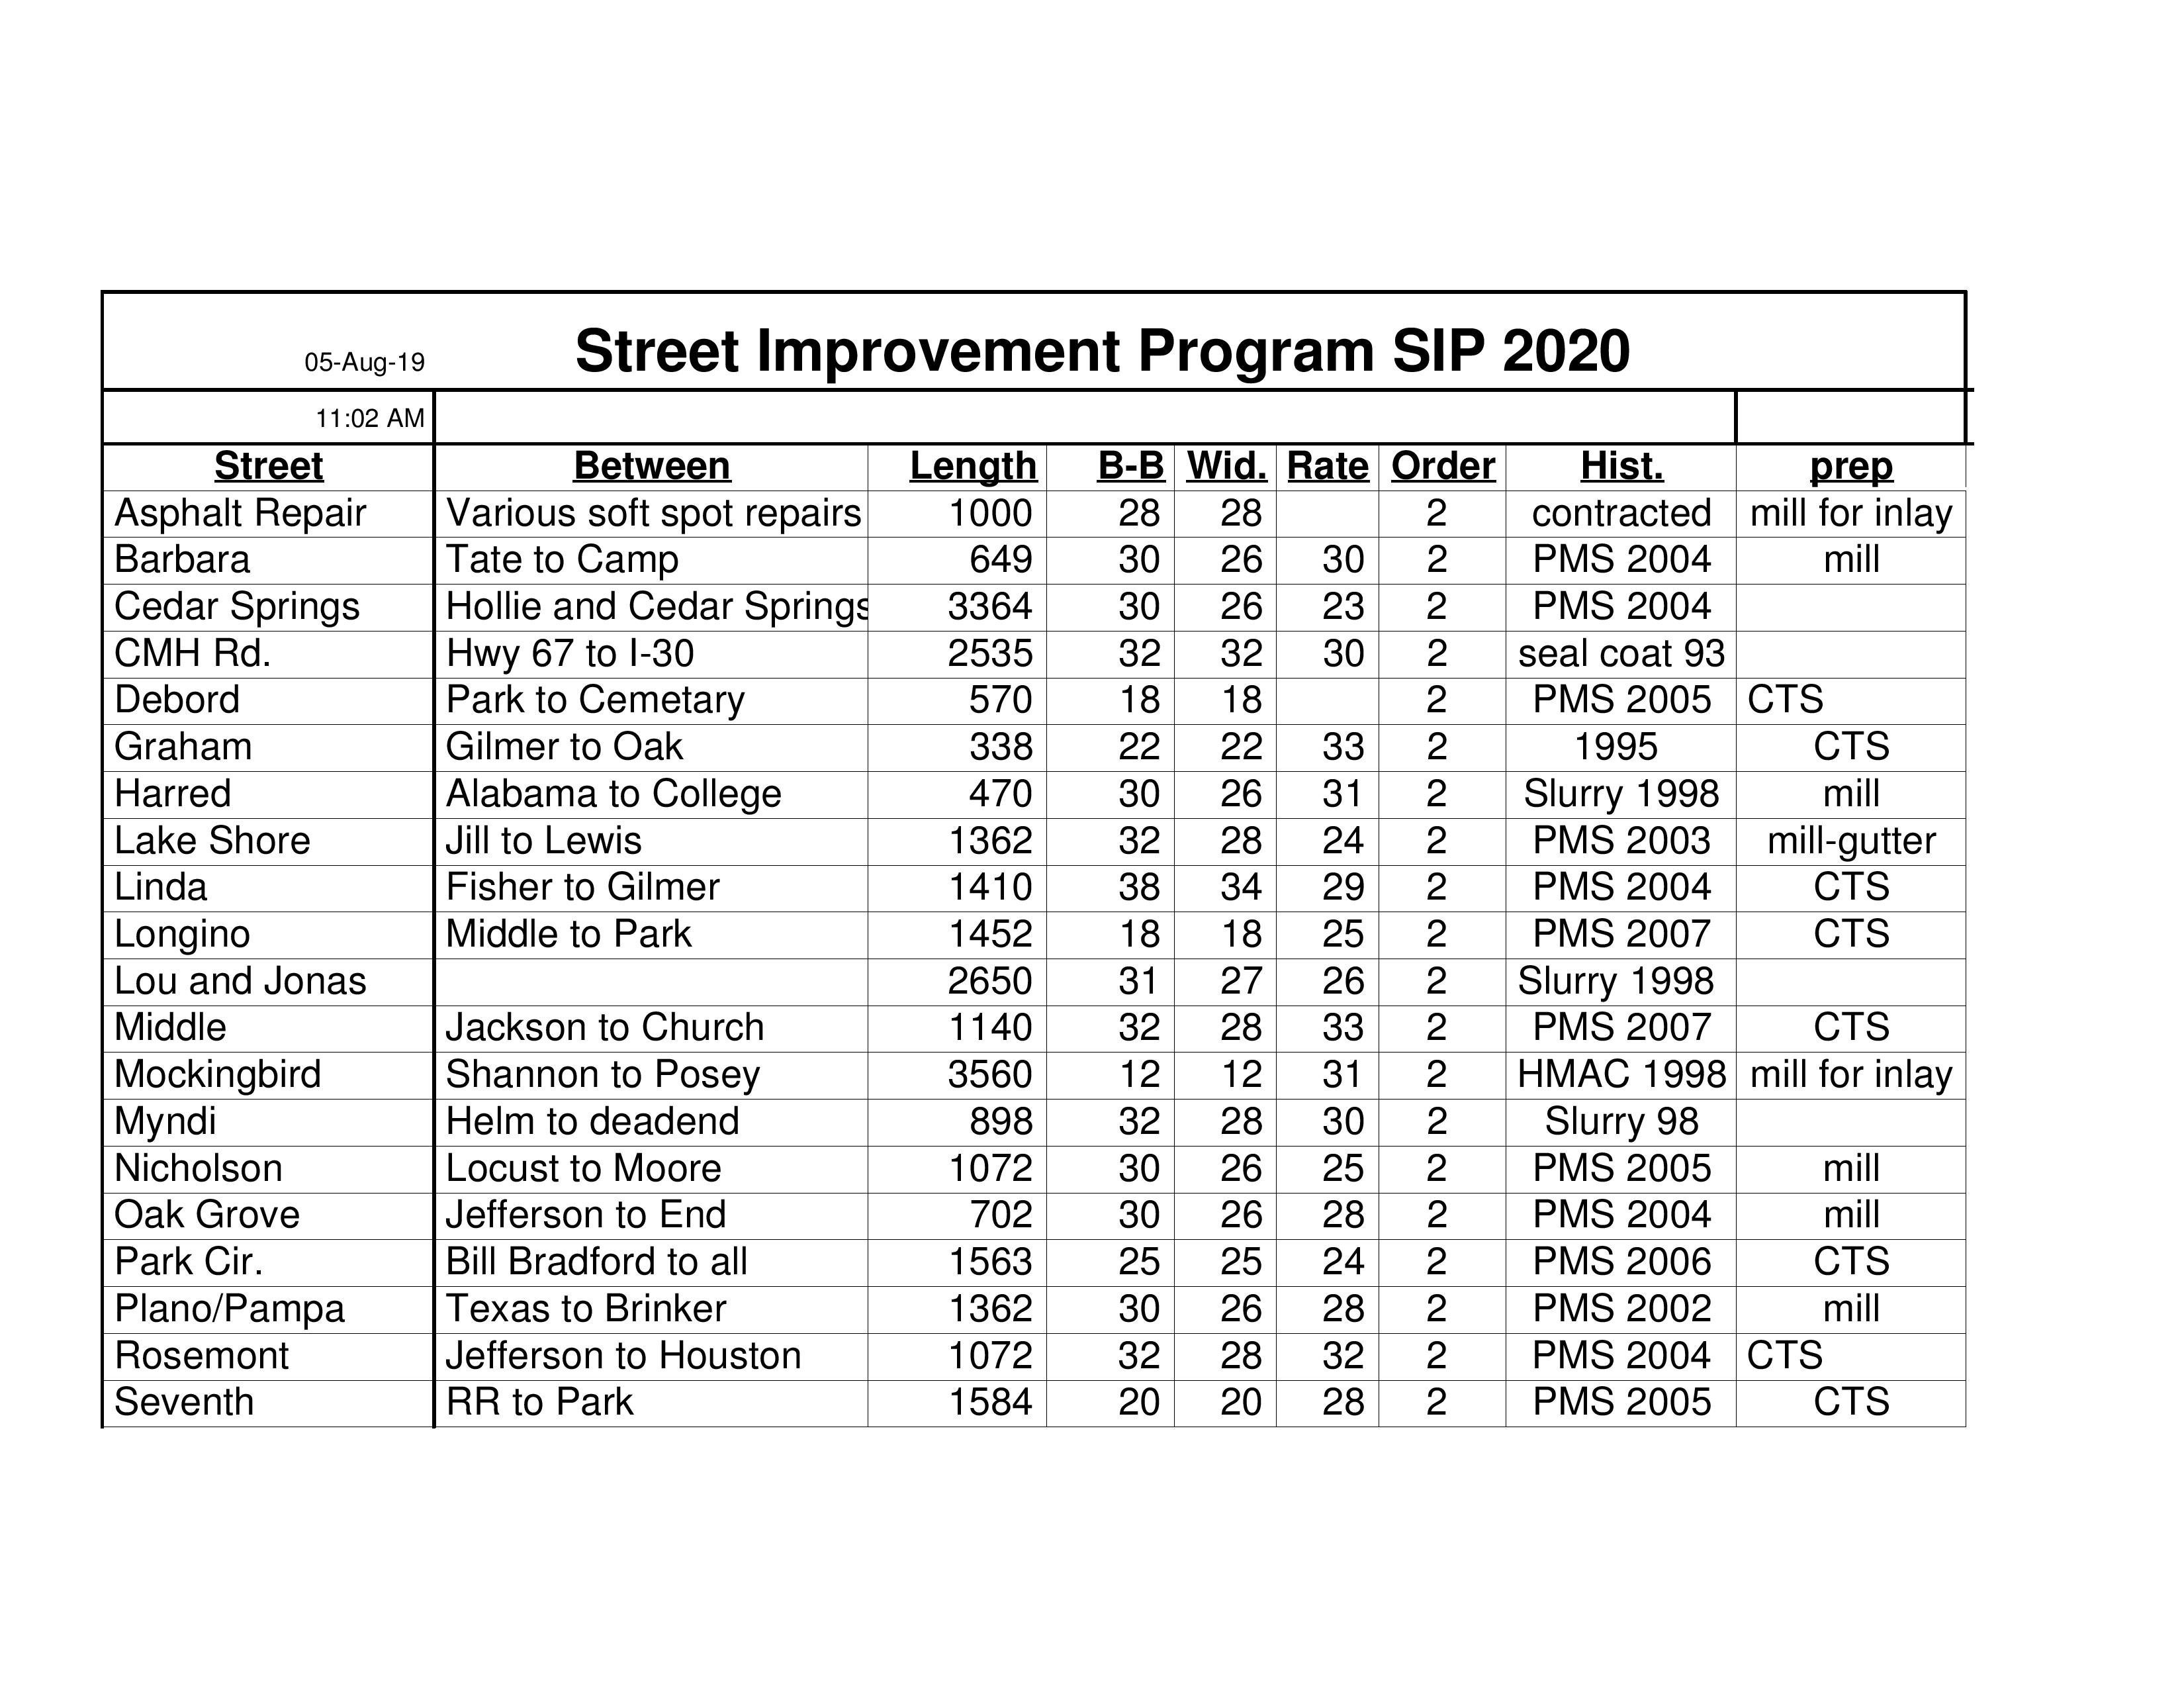 19 Roads Slated for Repairs Through City of Sulphur Springs’ 2020 Street Improvement Program